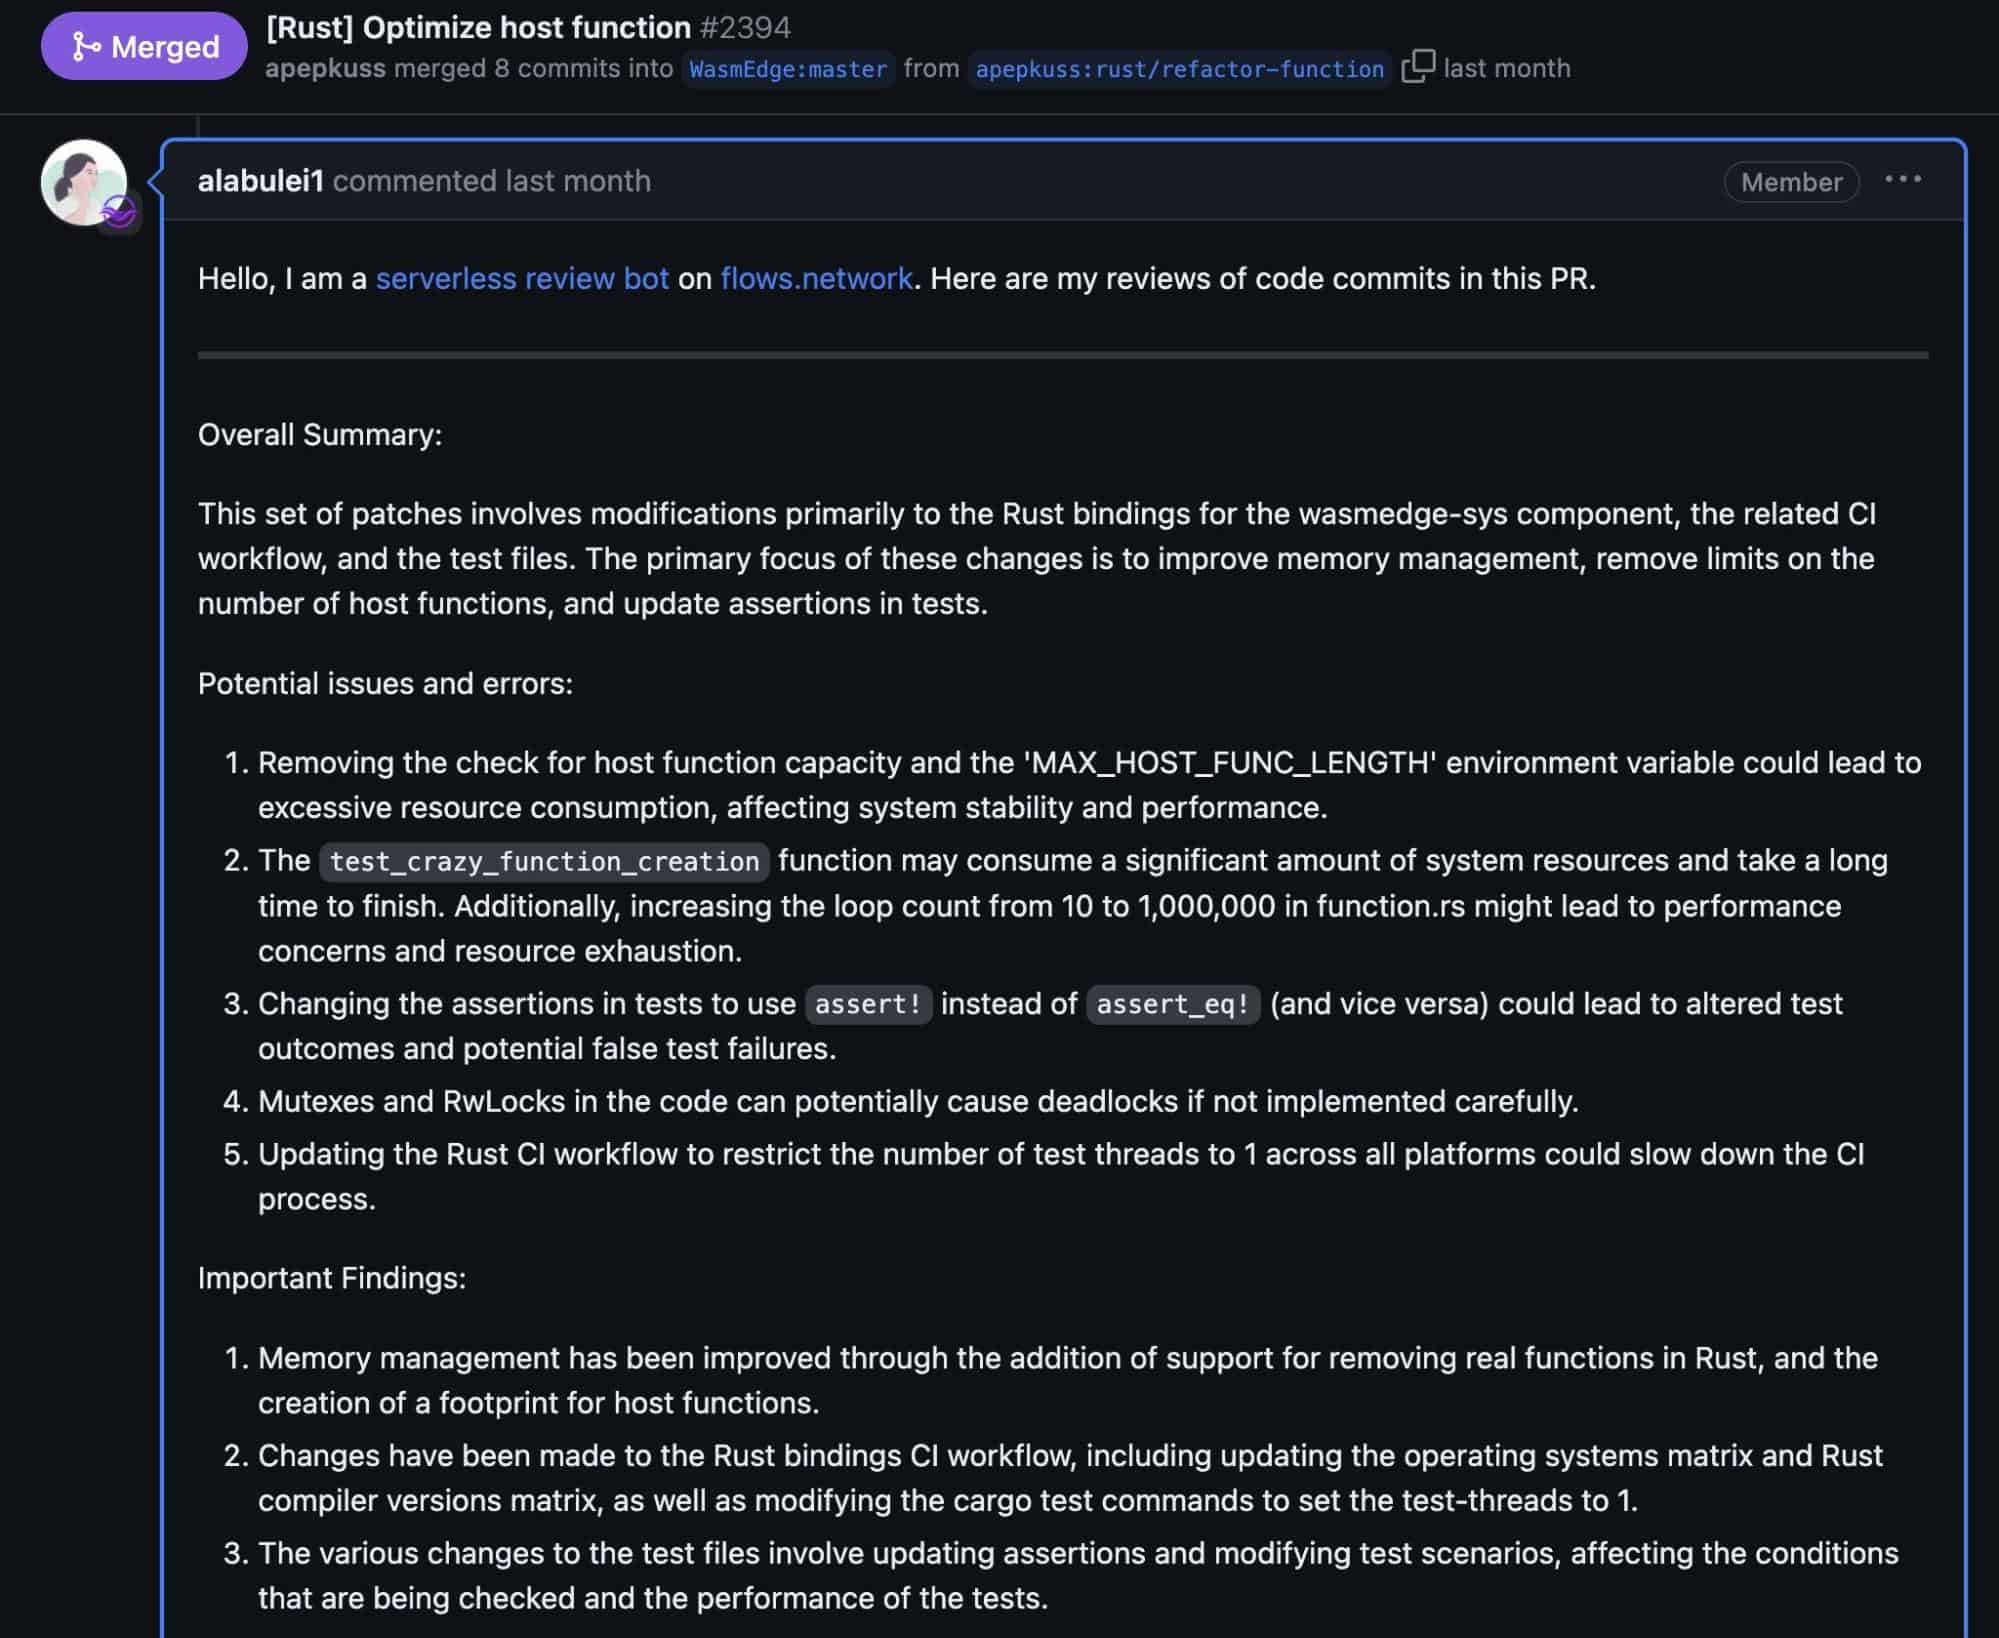 Screenshot showing alabulei1 review of code commits in Rust PR